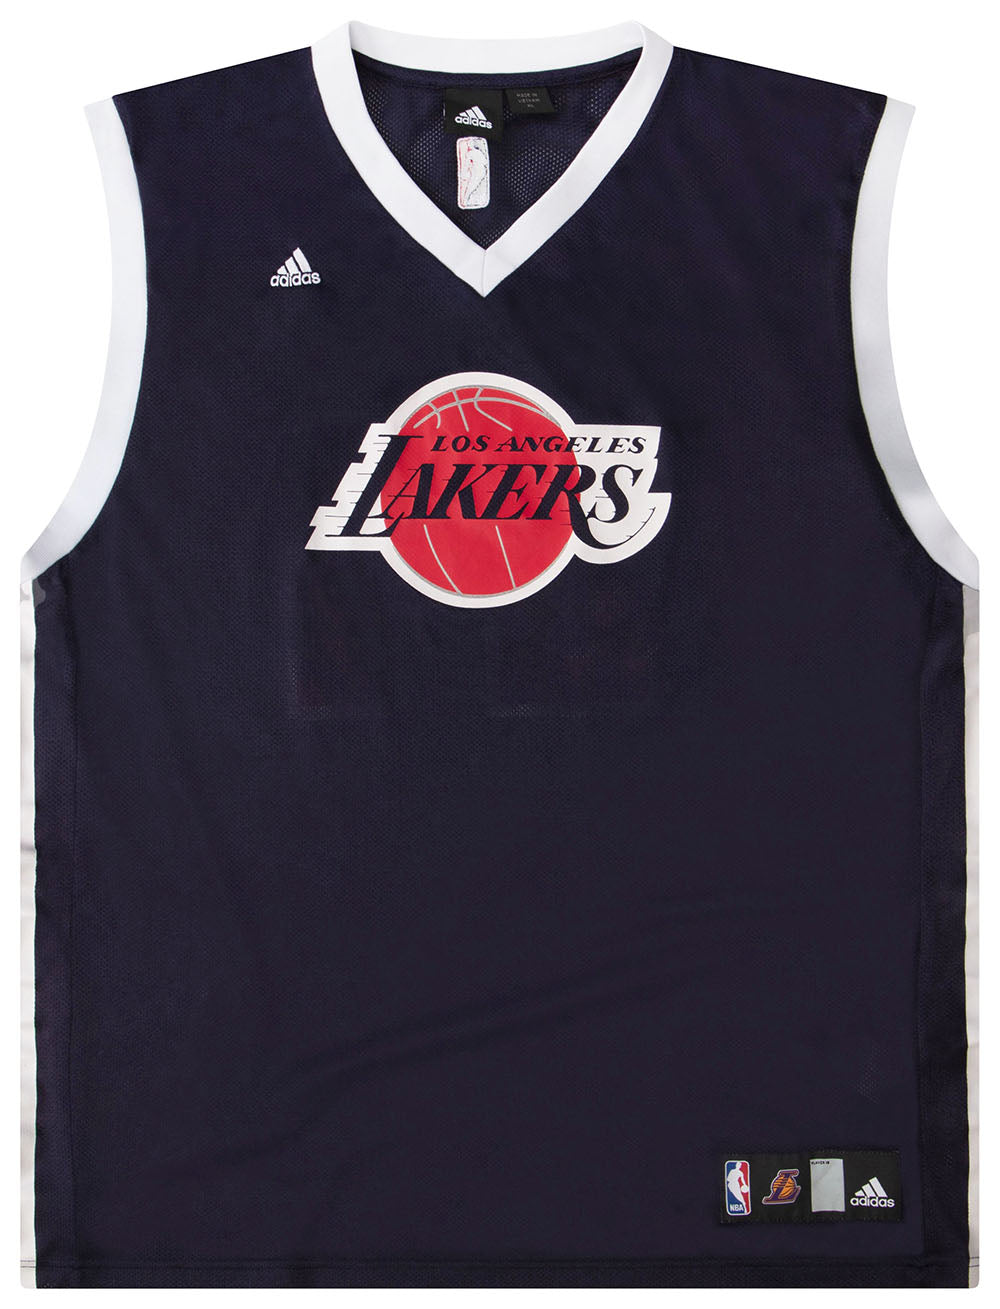 adidas, Other, Kobe Bryant La Lakers 24 Adidas Black Jersey Size 5